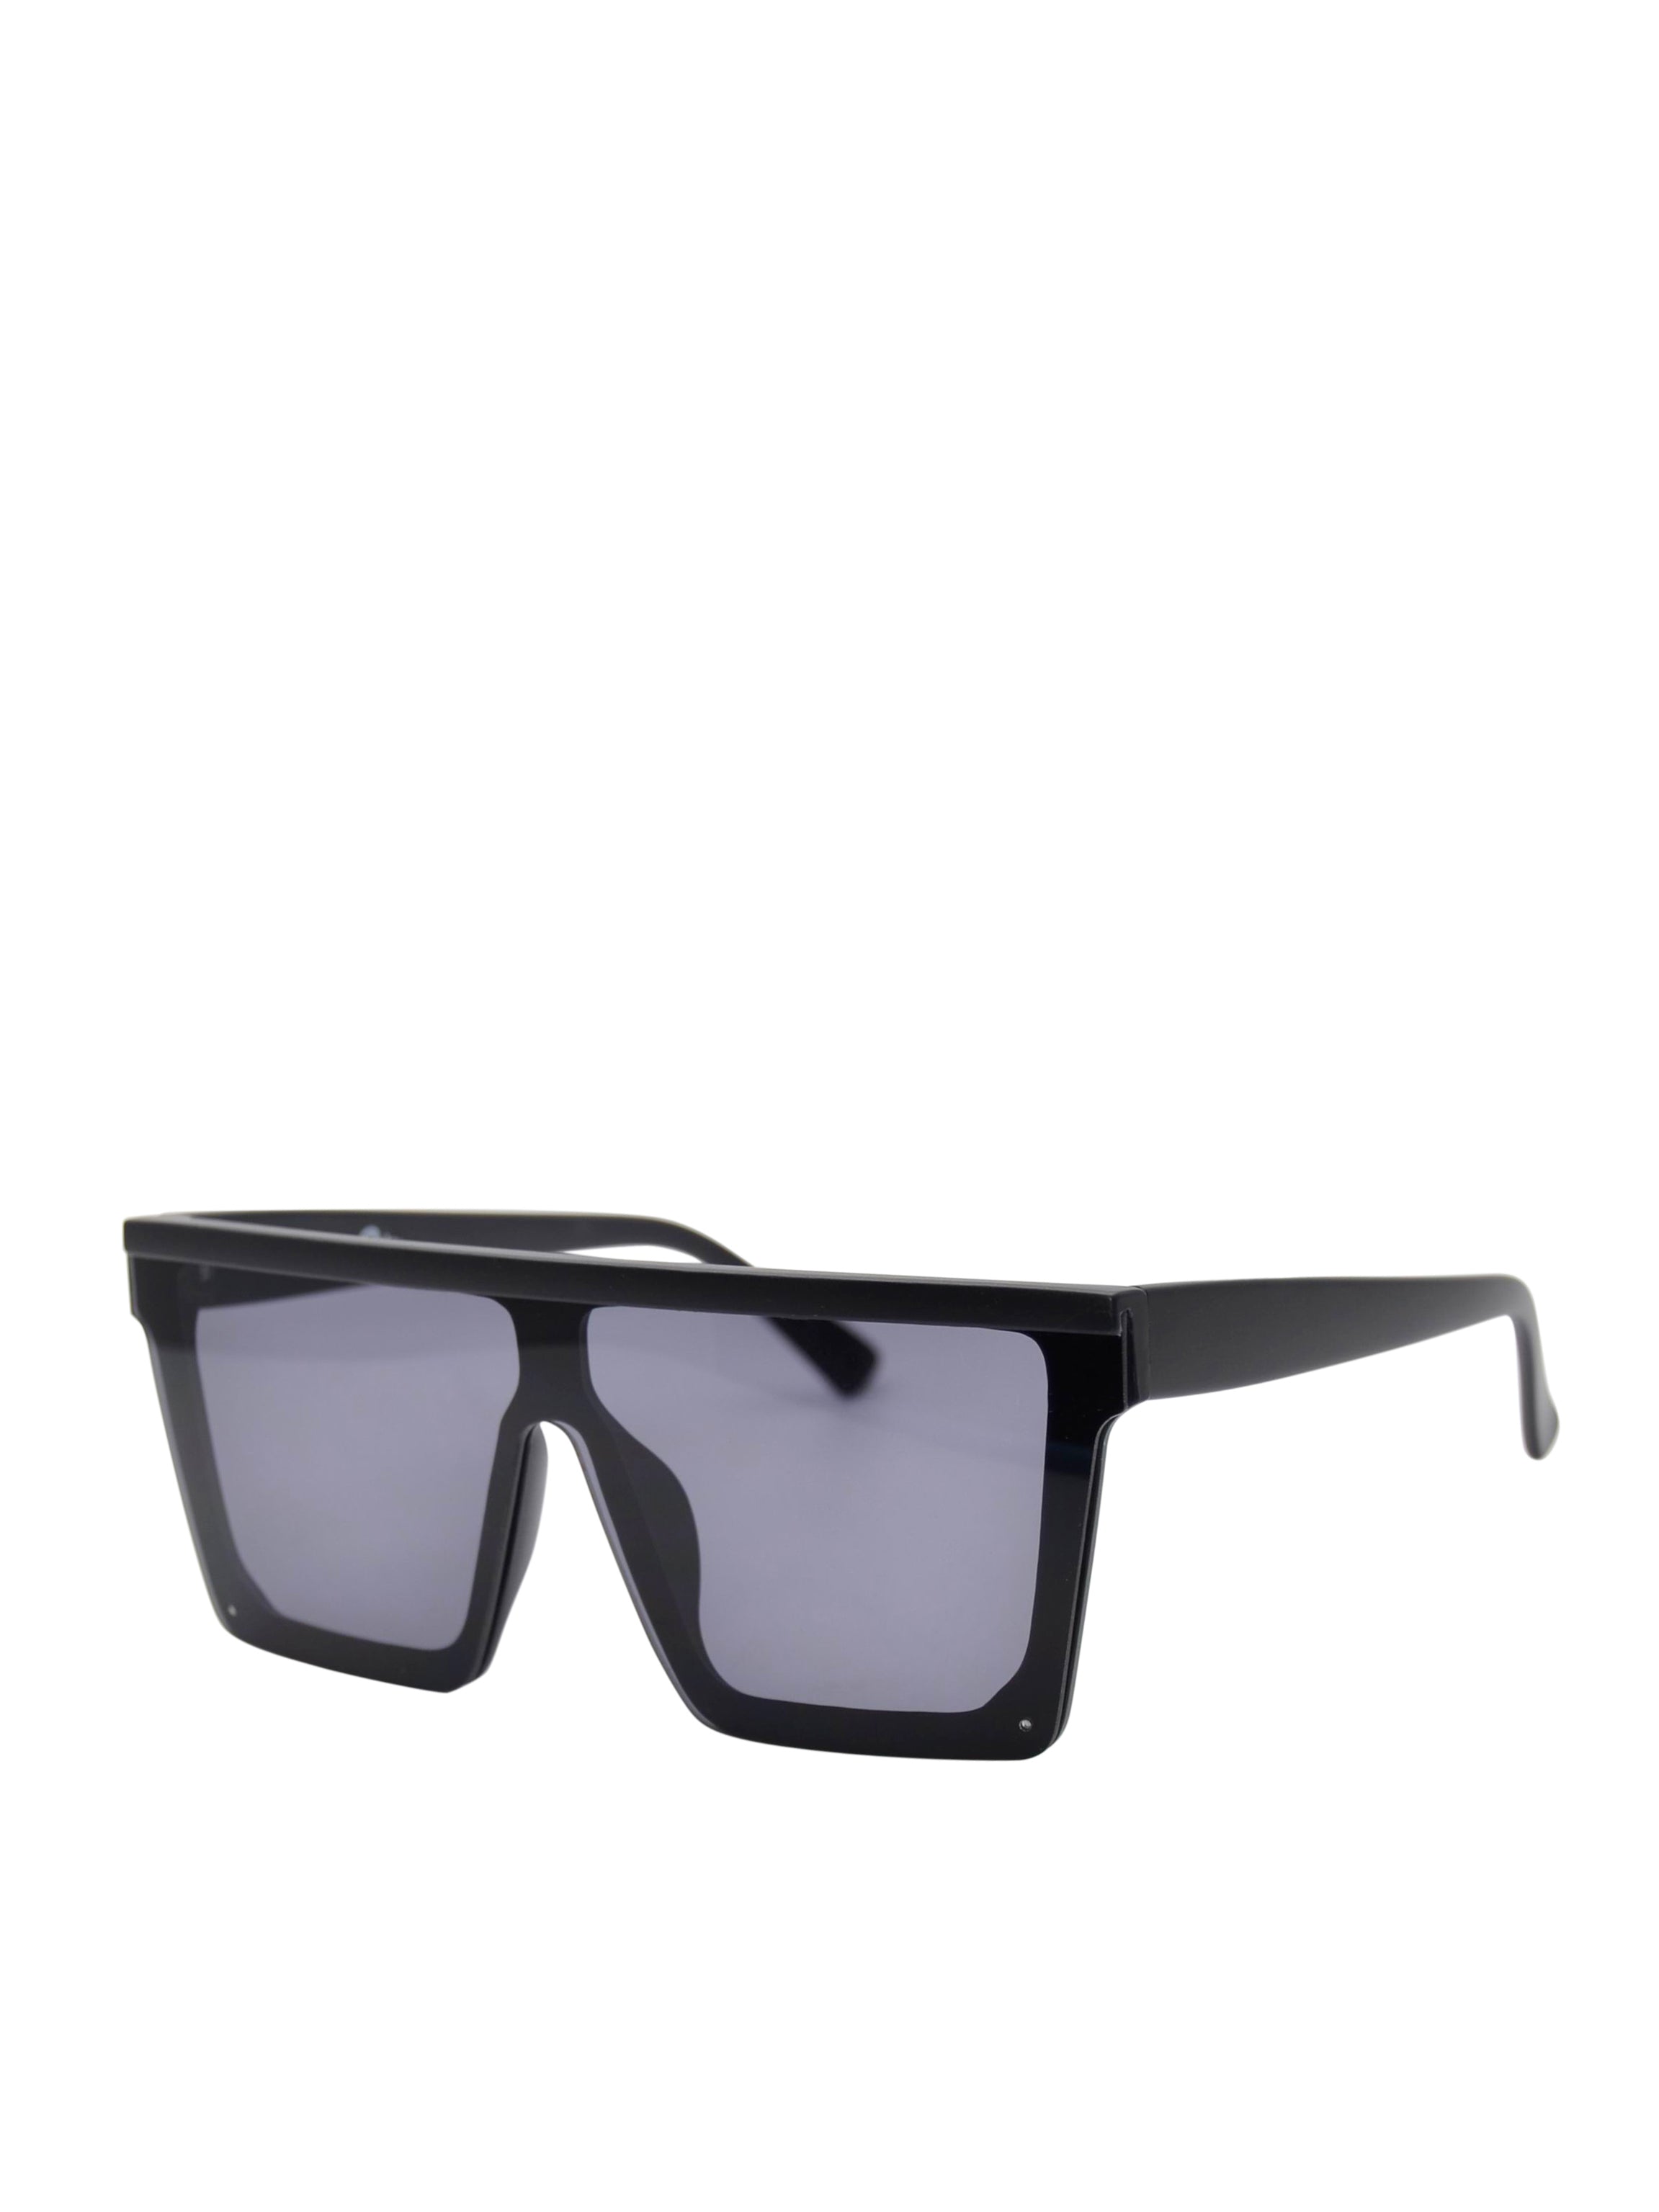 Malibu Sunglasses in Black